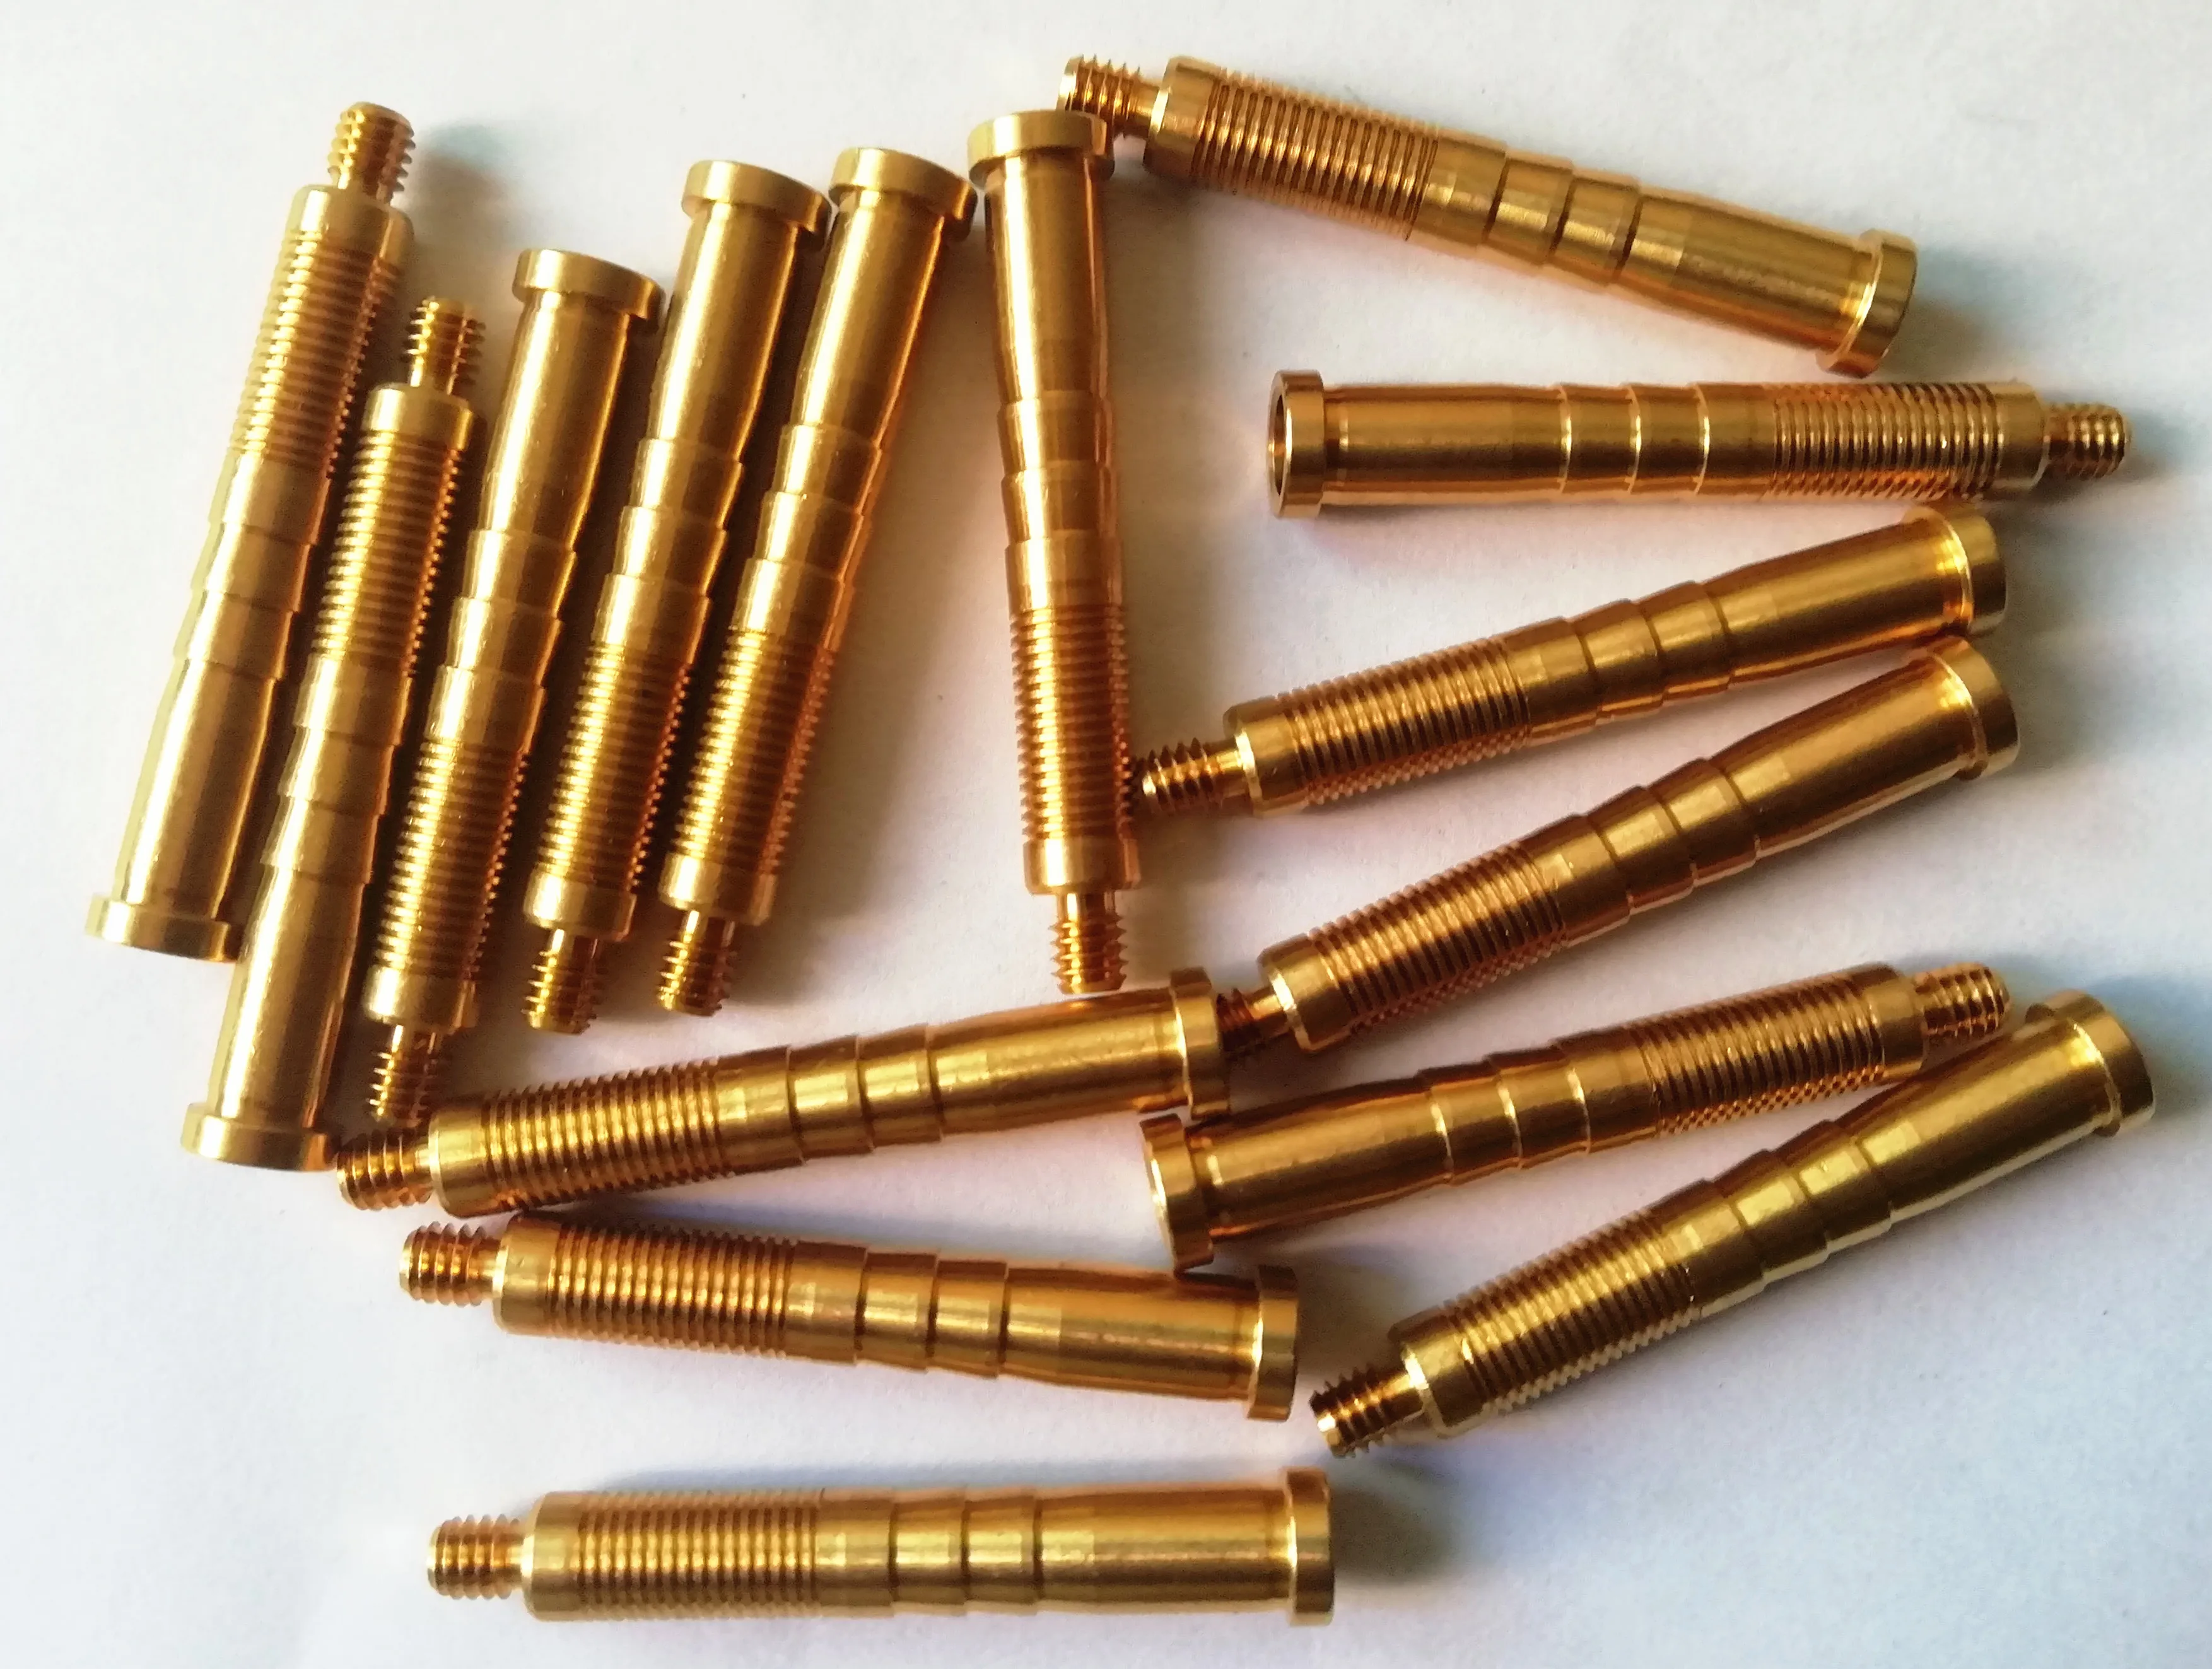 GPP Arrow Point Brass Inserts Copper Arrow .244/6.2mm,24 PK Inserts Weights 